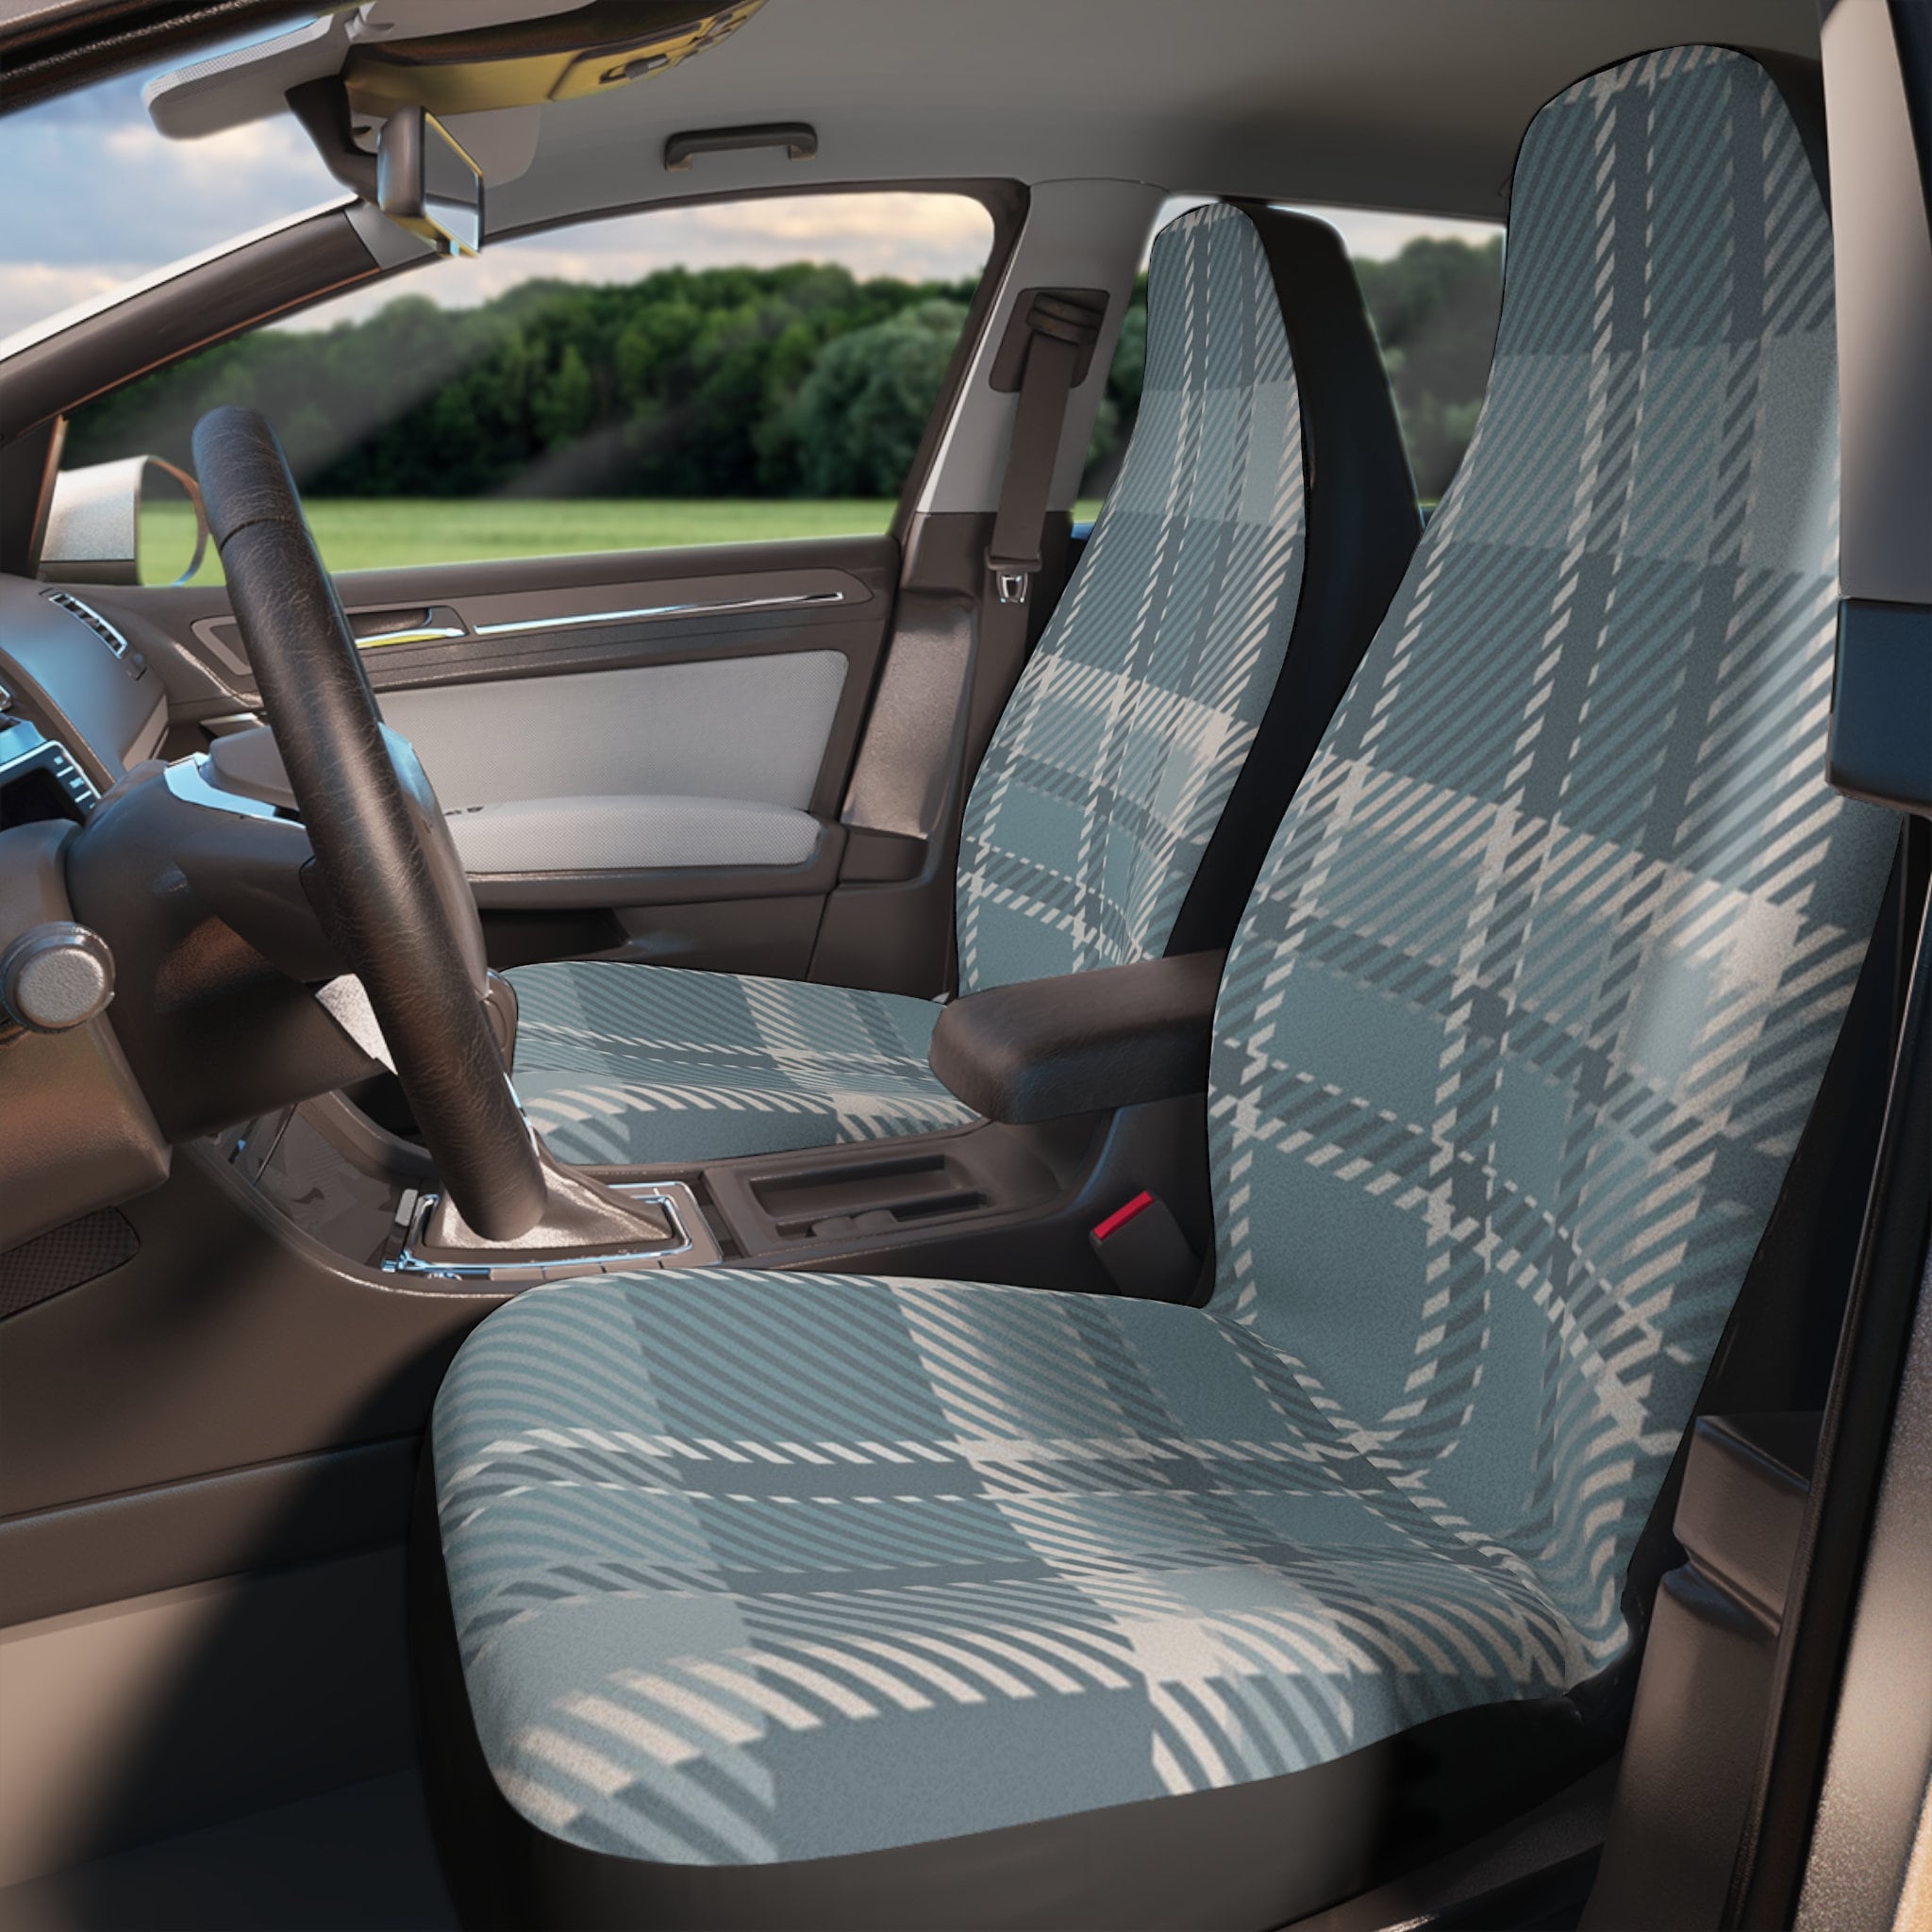 Car interior seat - .de